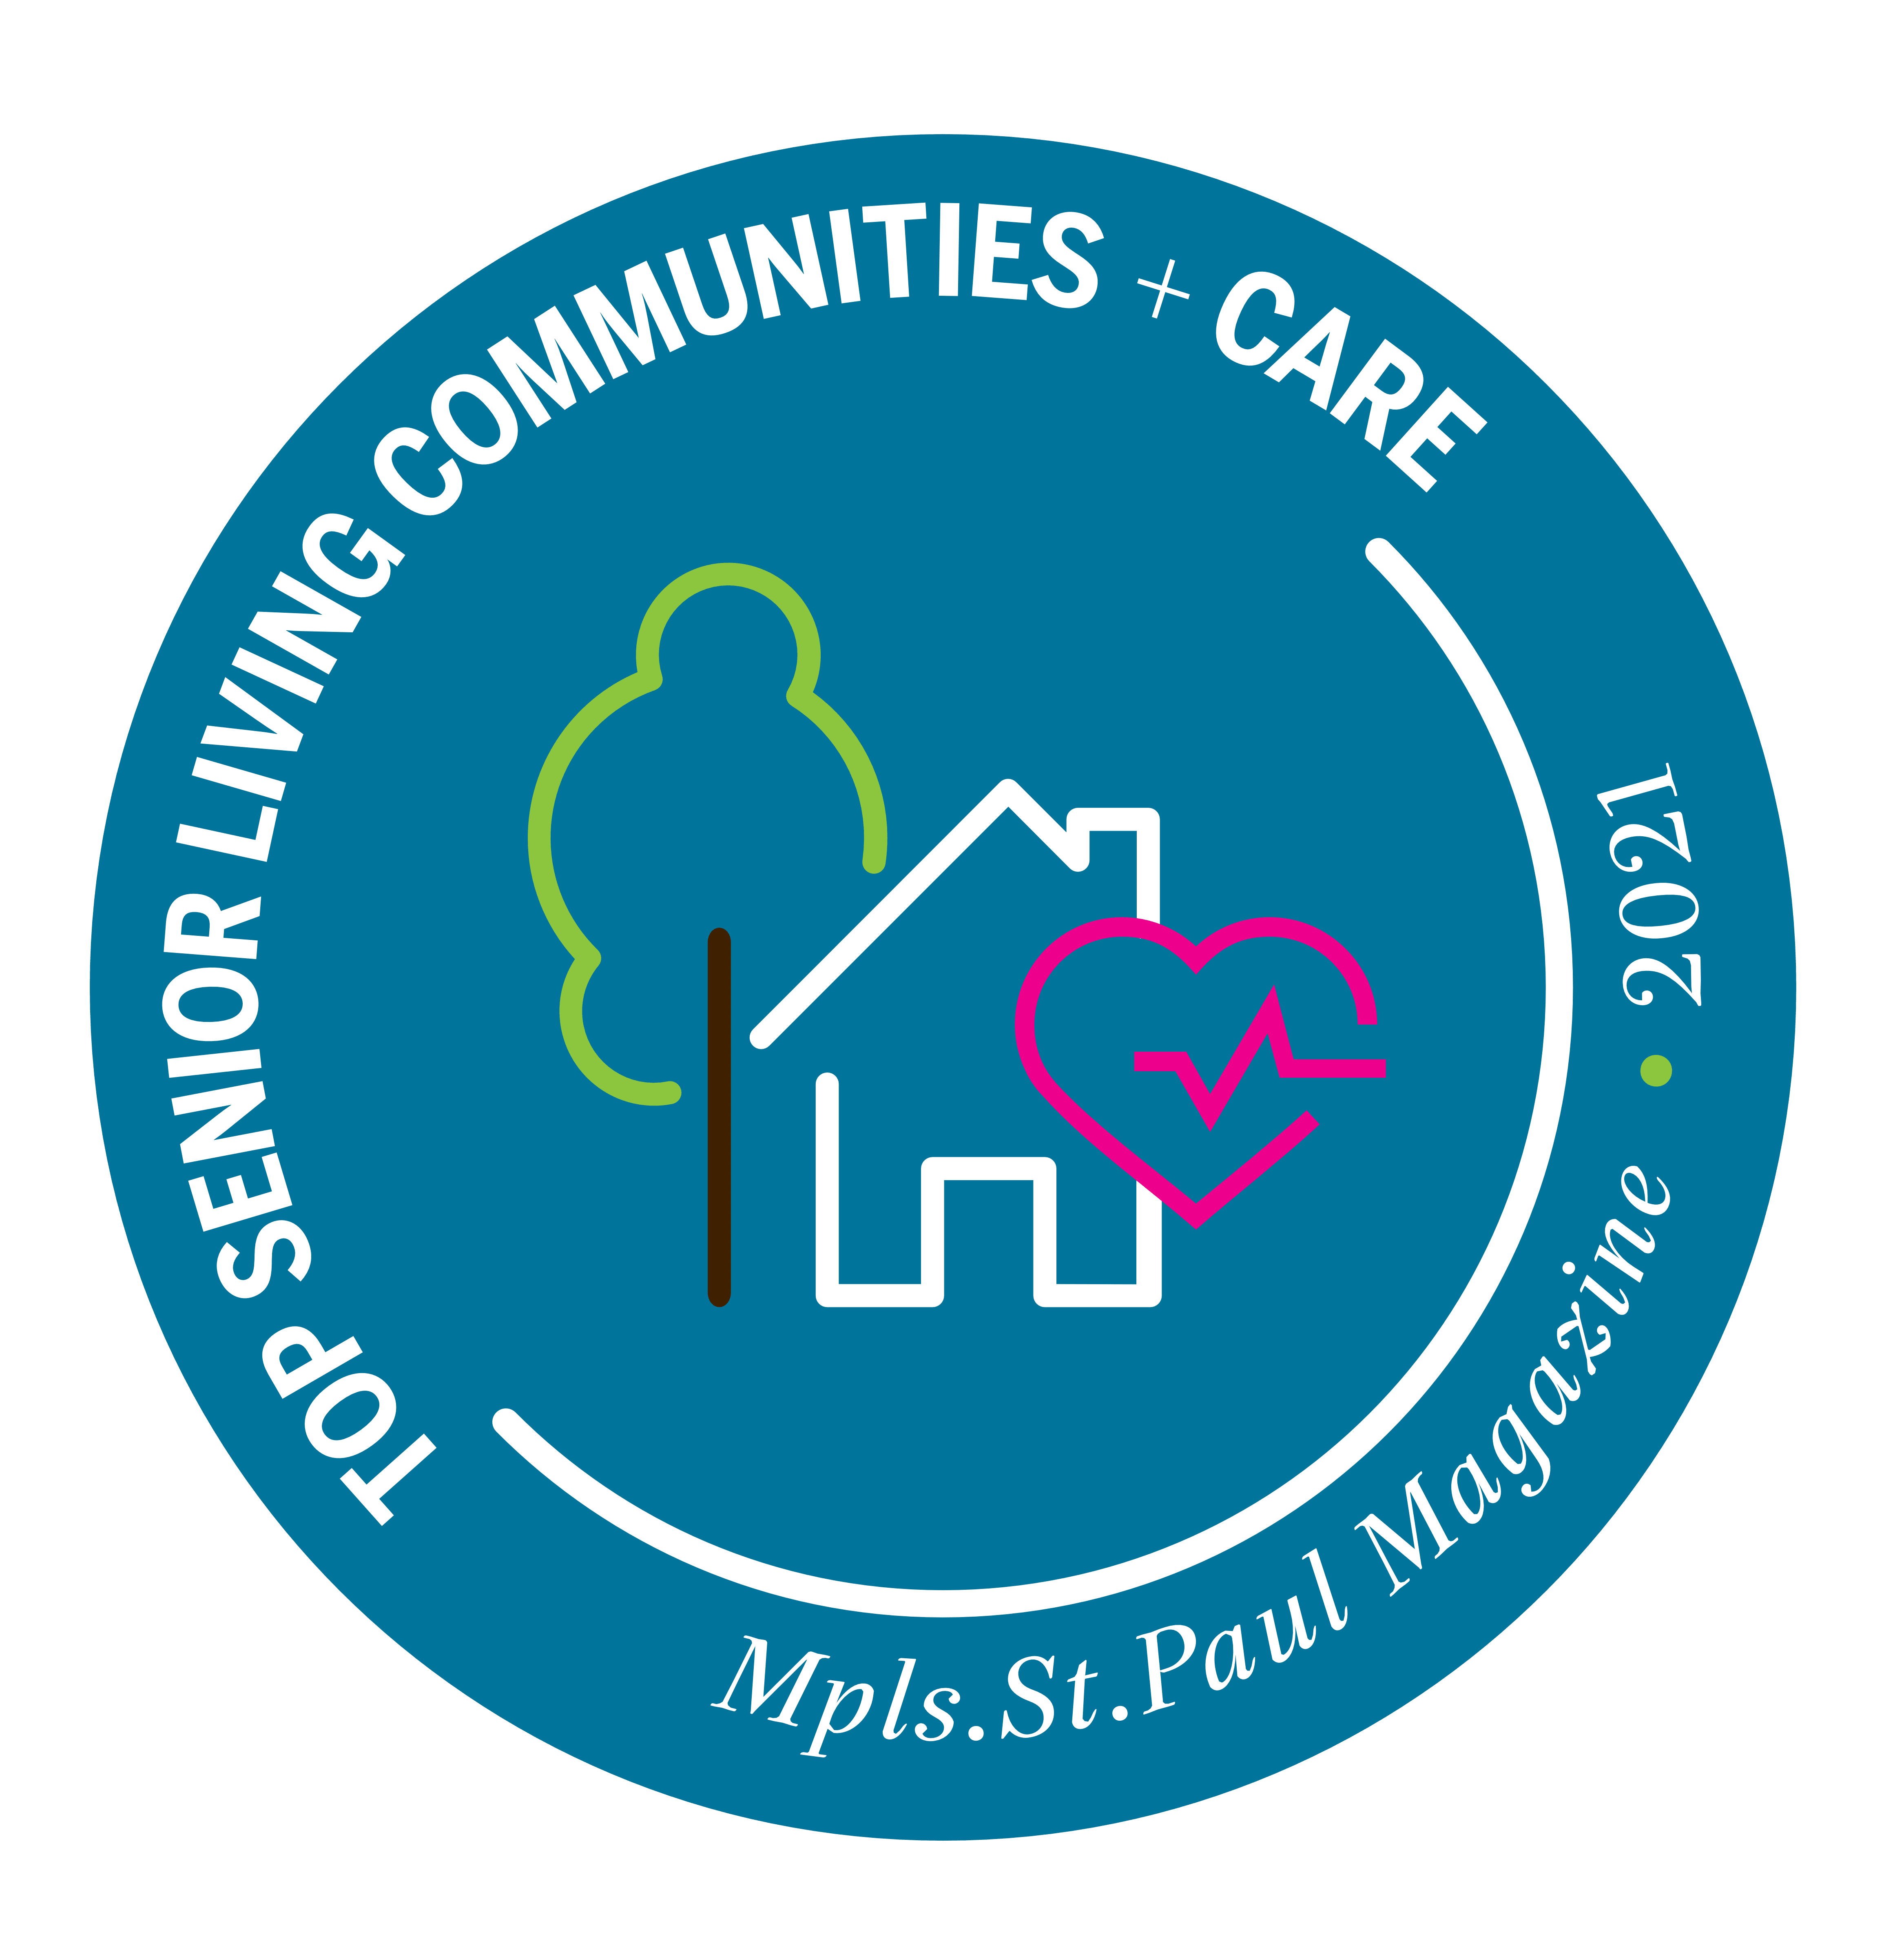 Top Senior Living Communities + Care Award 2021